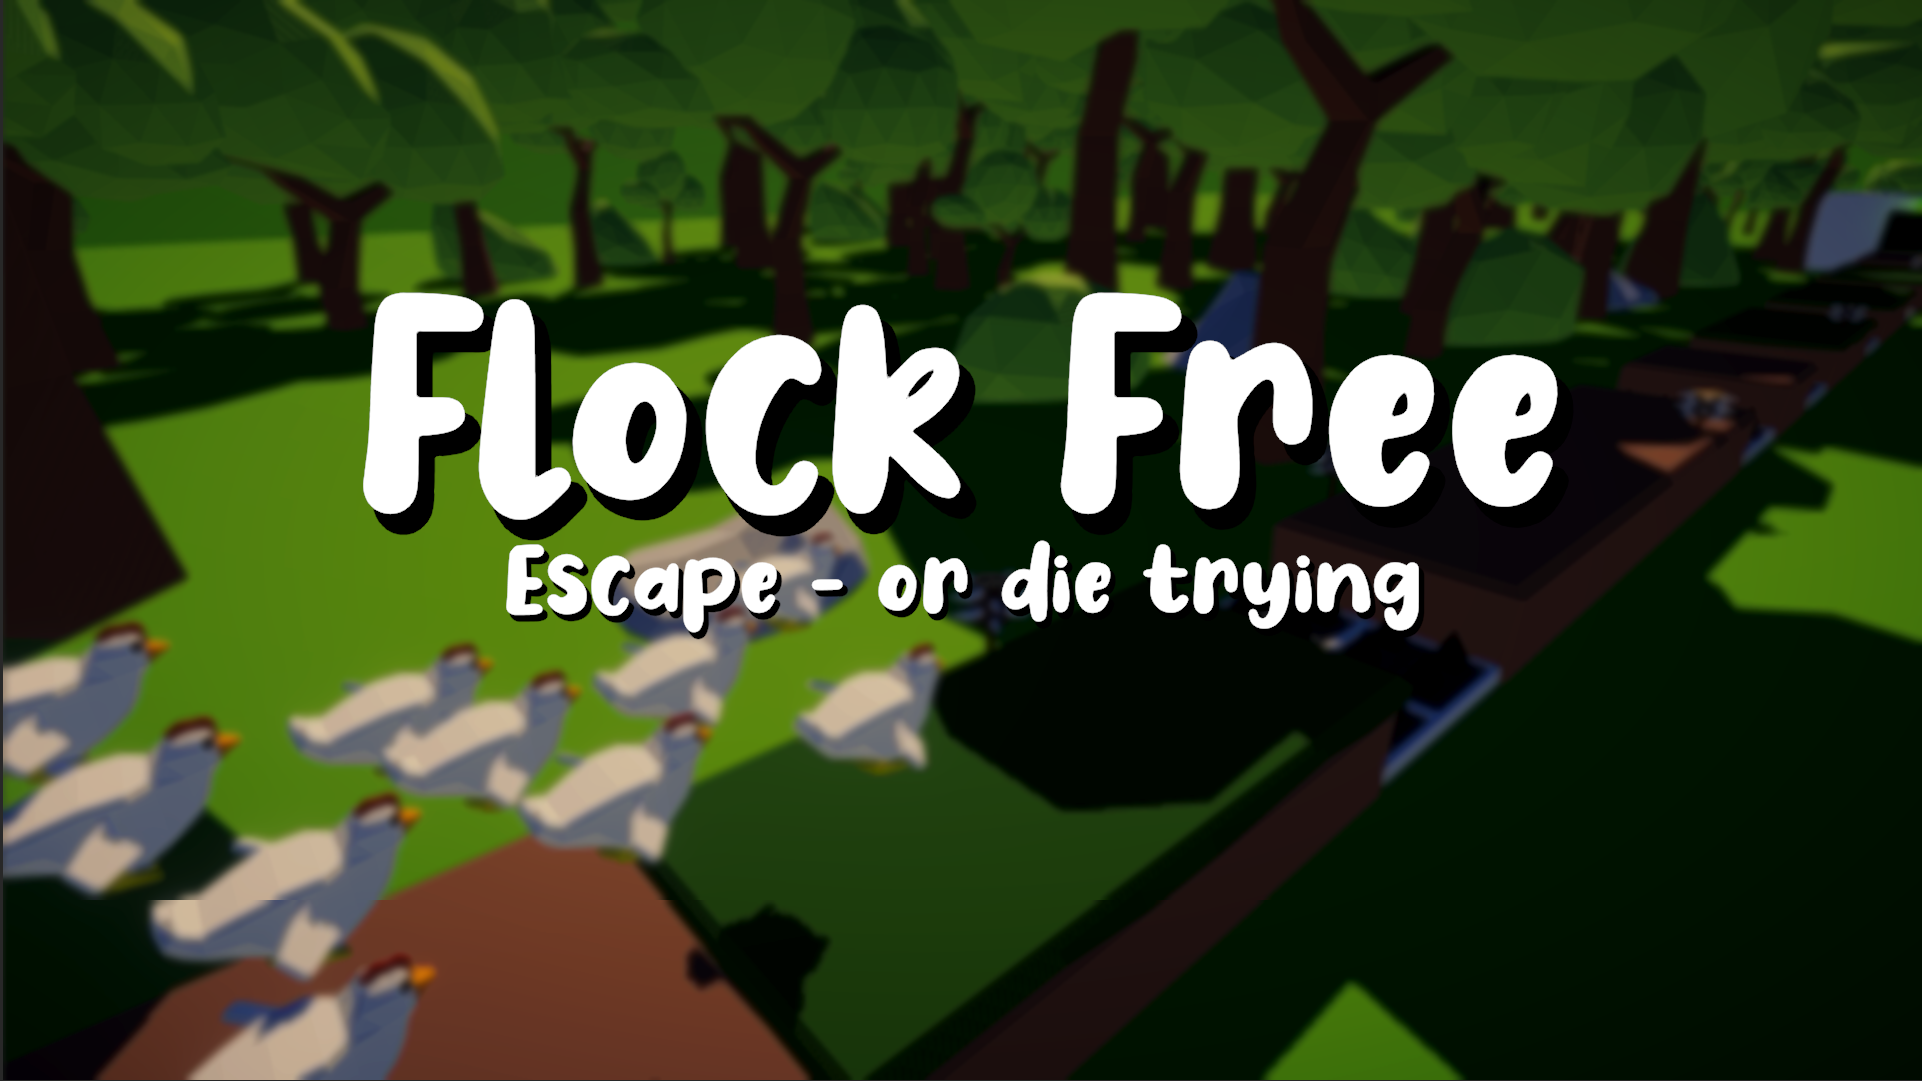 Flock Free